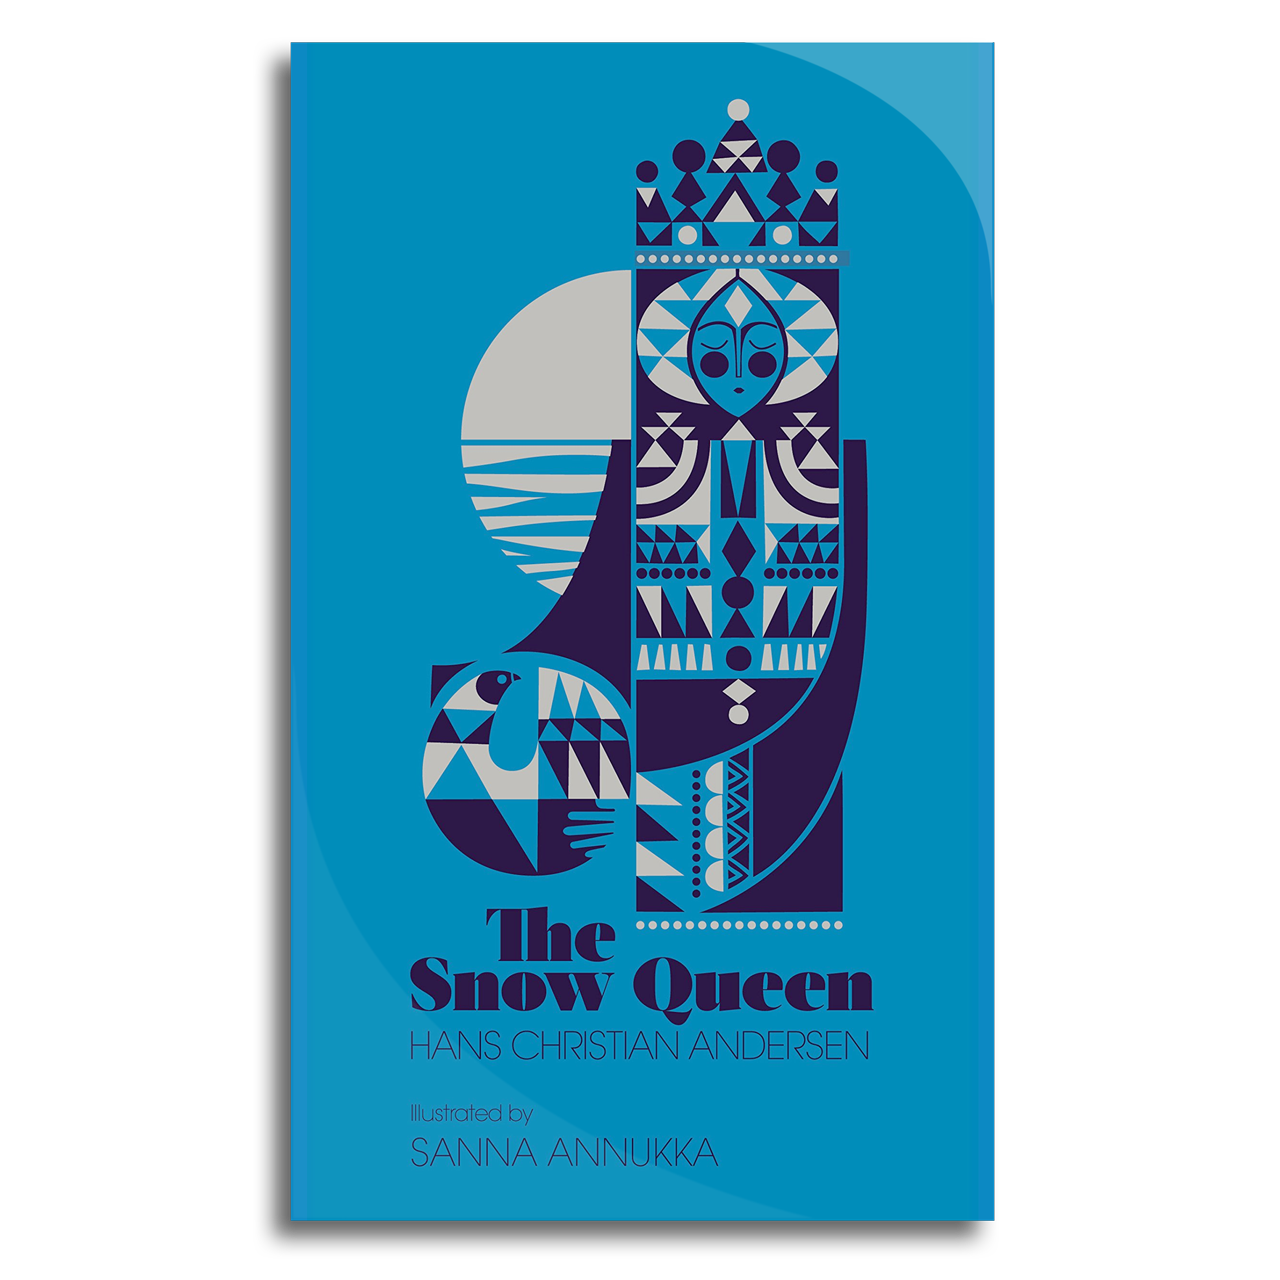 Andersen（著）Sanna　Seven　Tale　in　A　本屋・REWIND（リワインド）ONLINE　Queen:　The　STORE｜東京・自由が丘　Christian　Snow　Stories｜Hans　Annukka（画）【英語版】